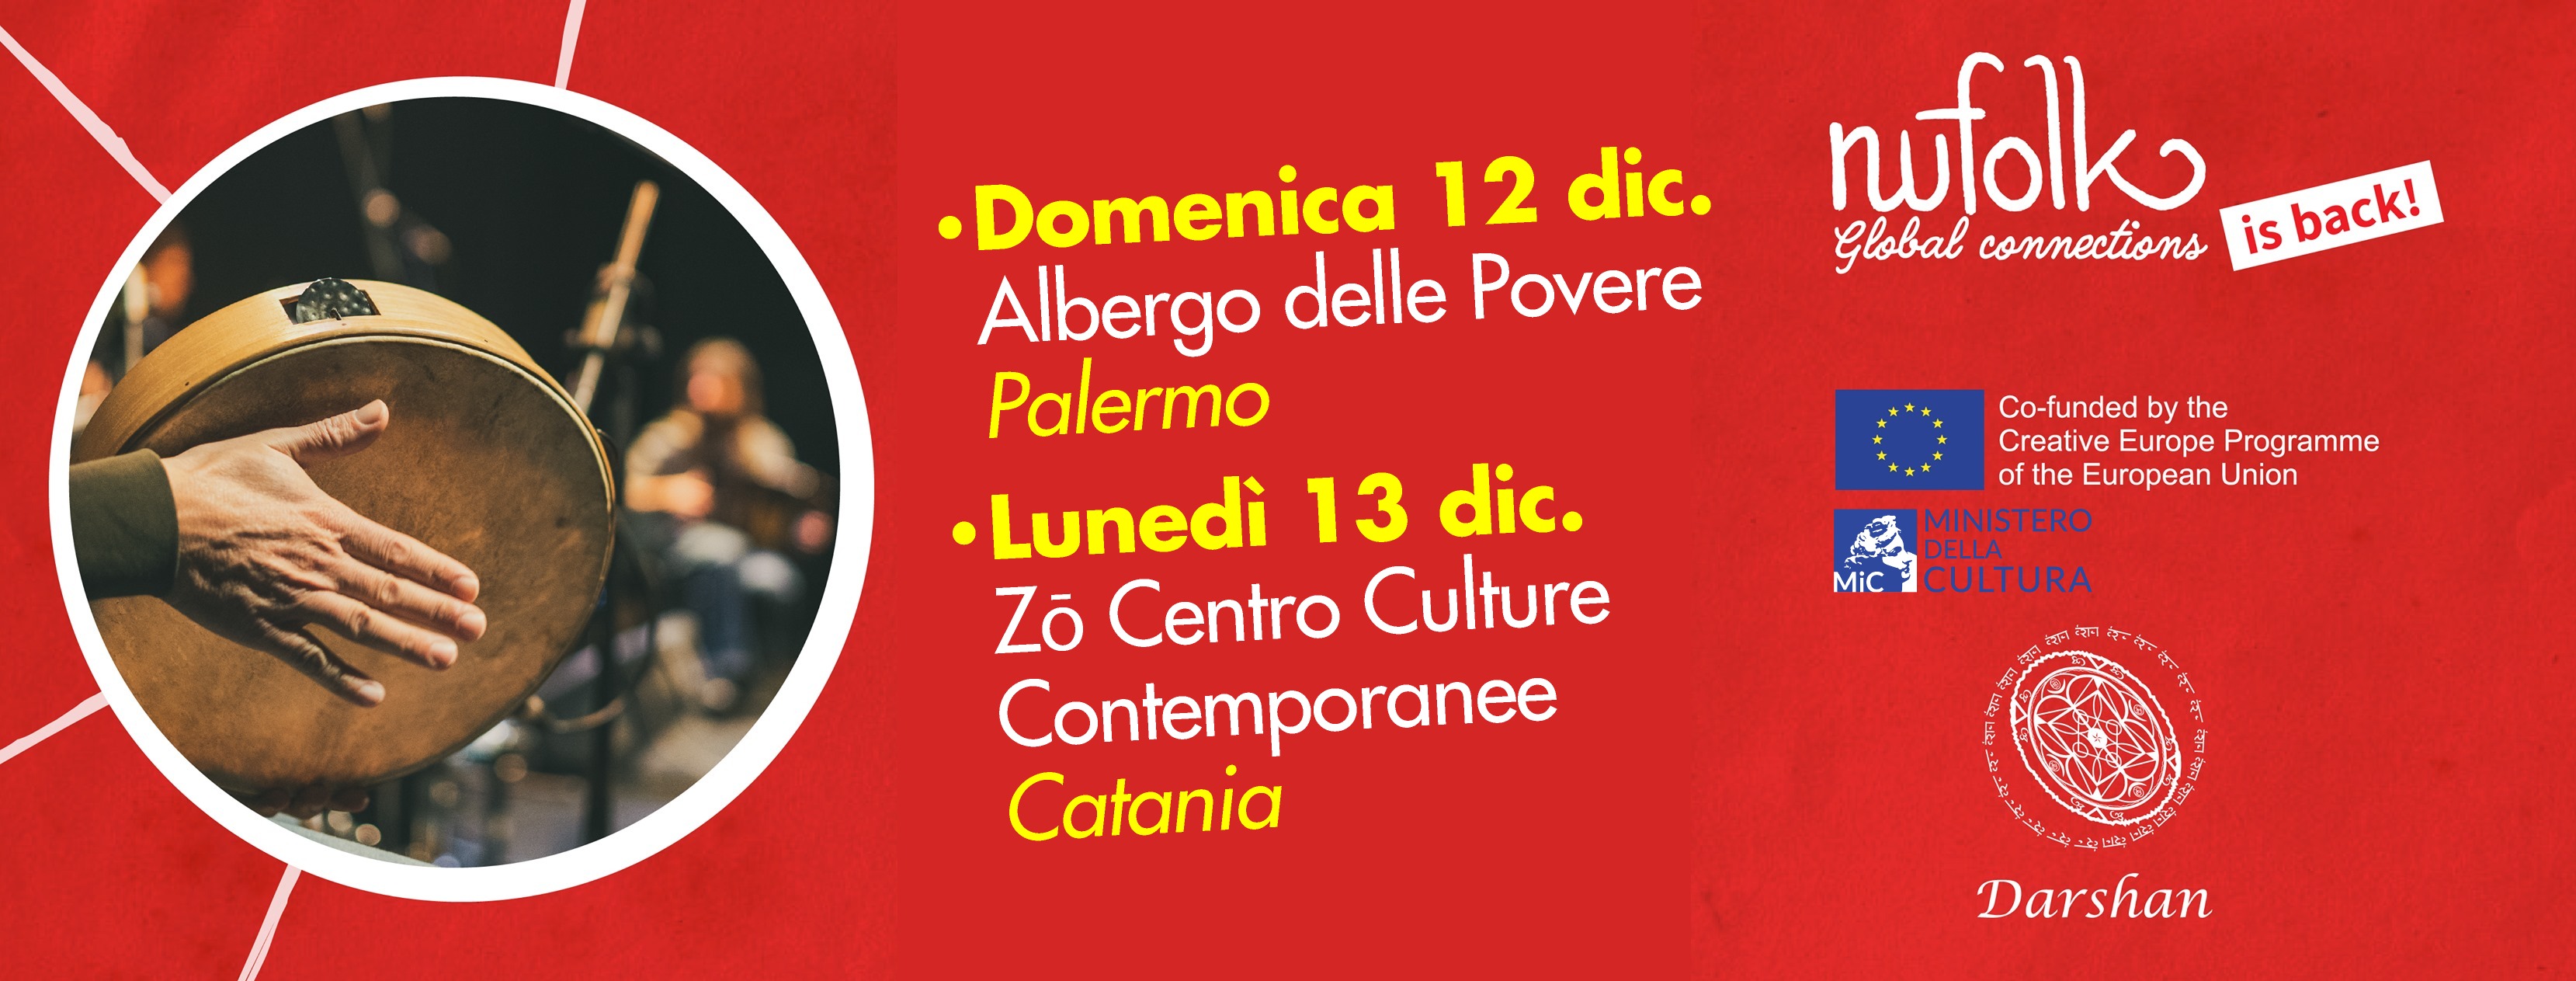 12/13 dic – NUFOLK GLOBAL CONNECTIONS chiude il tour in Sicilia